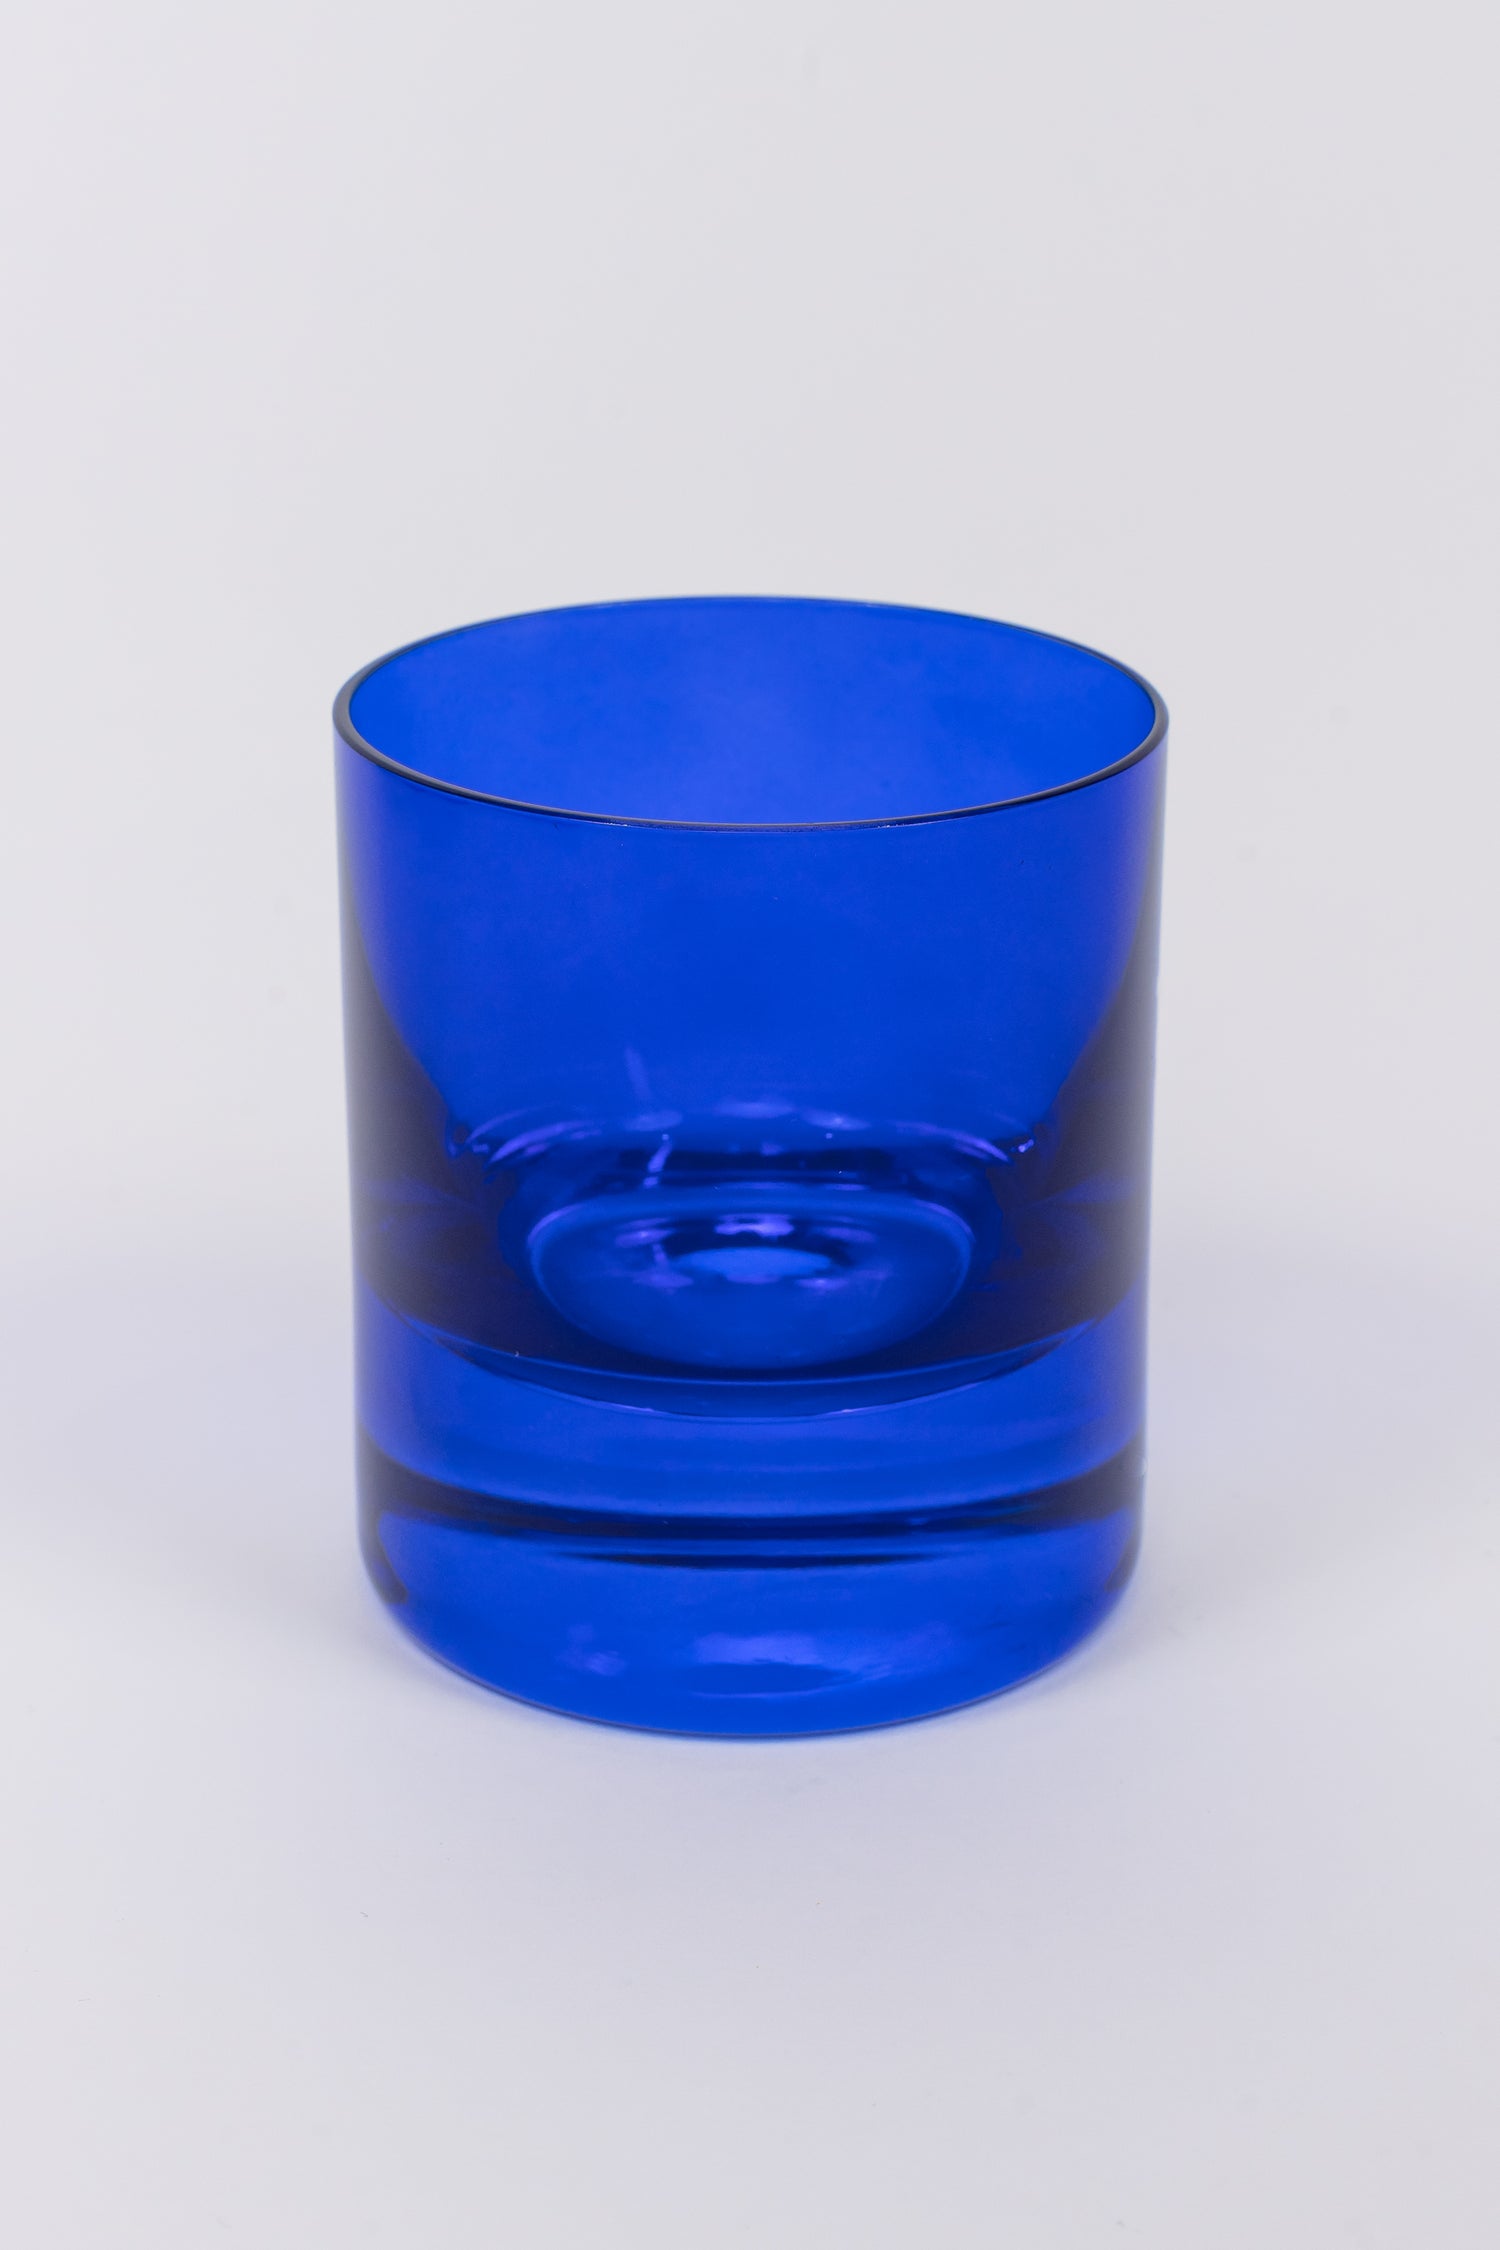 Estelle Colored Rocks Glass - Set of 6 {Royal Blue}